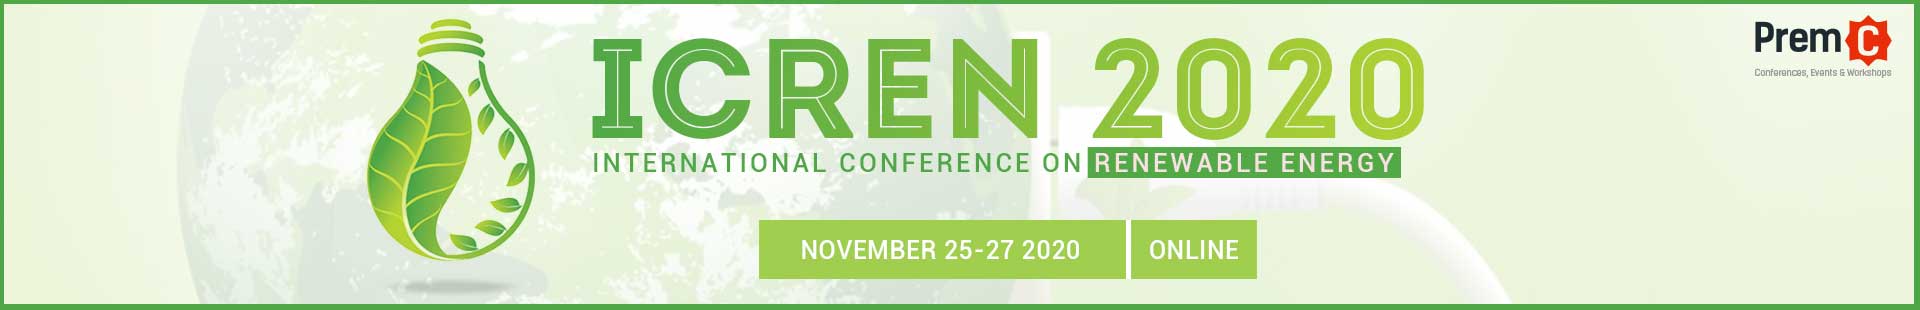 International Conference on Renewable Energy banner